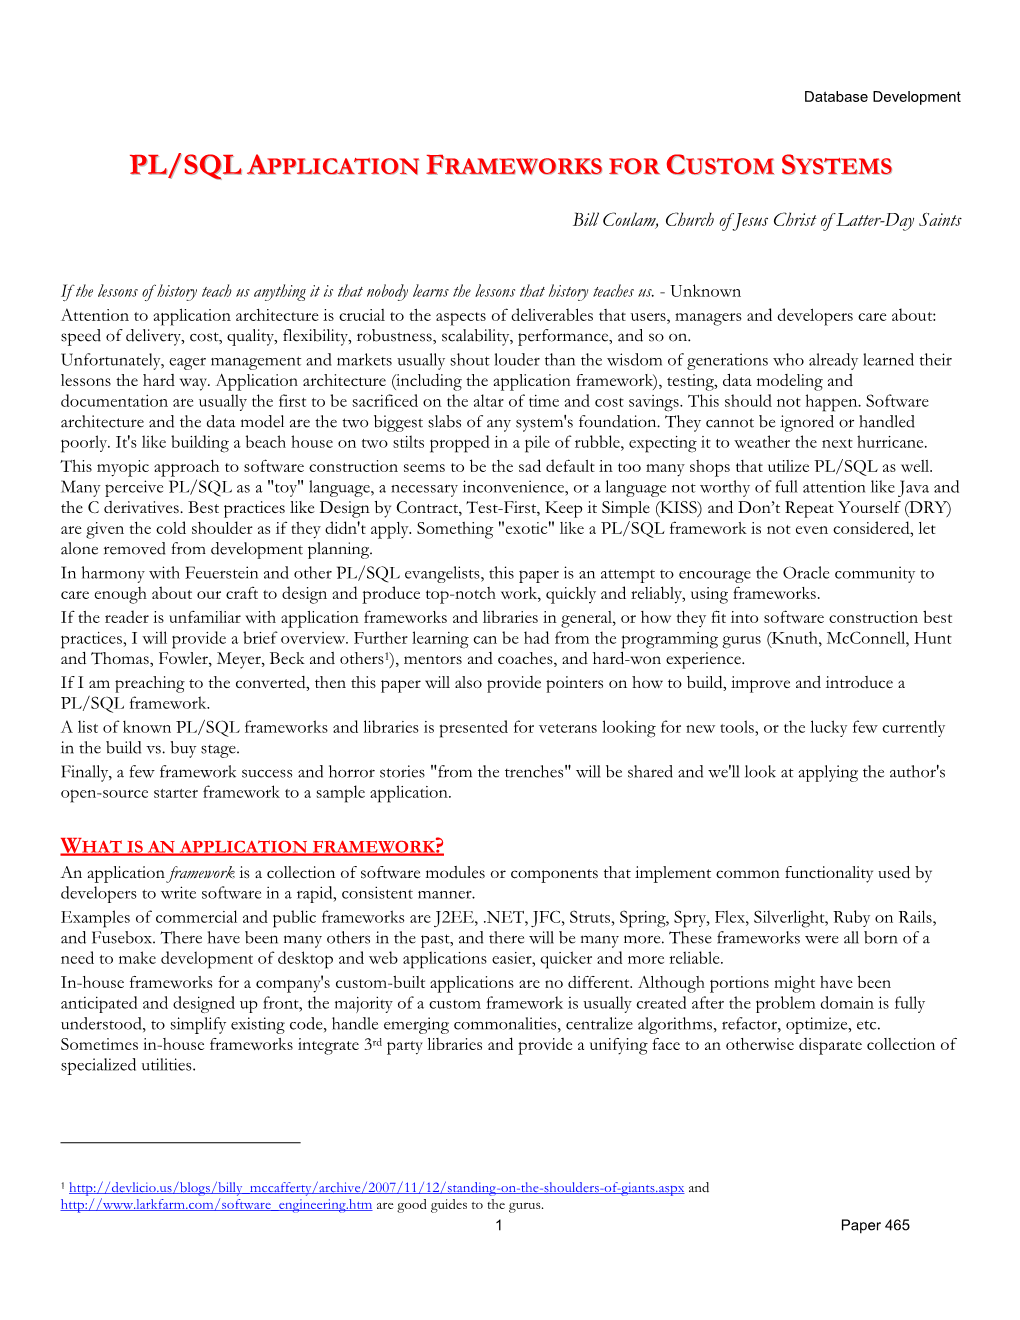 Pl/Sql Application Frameworks for Custom Systems